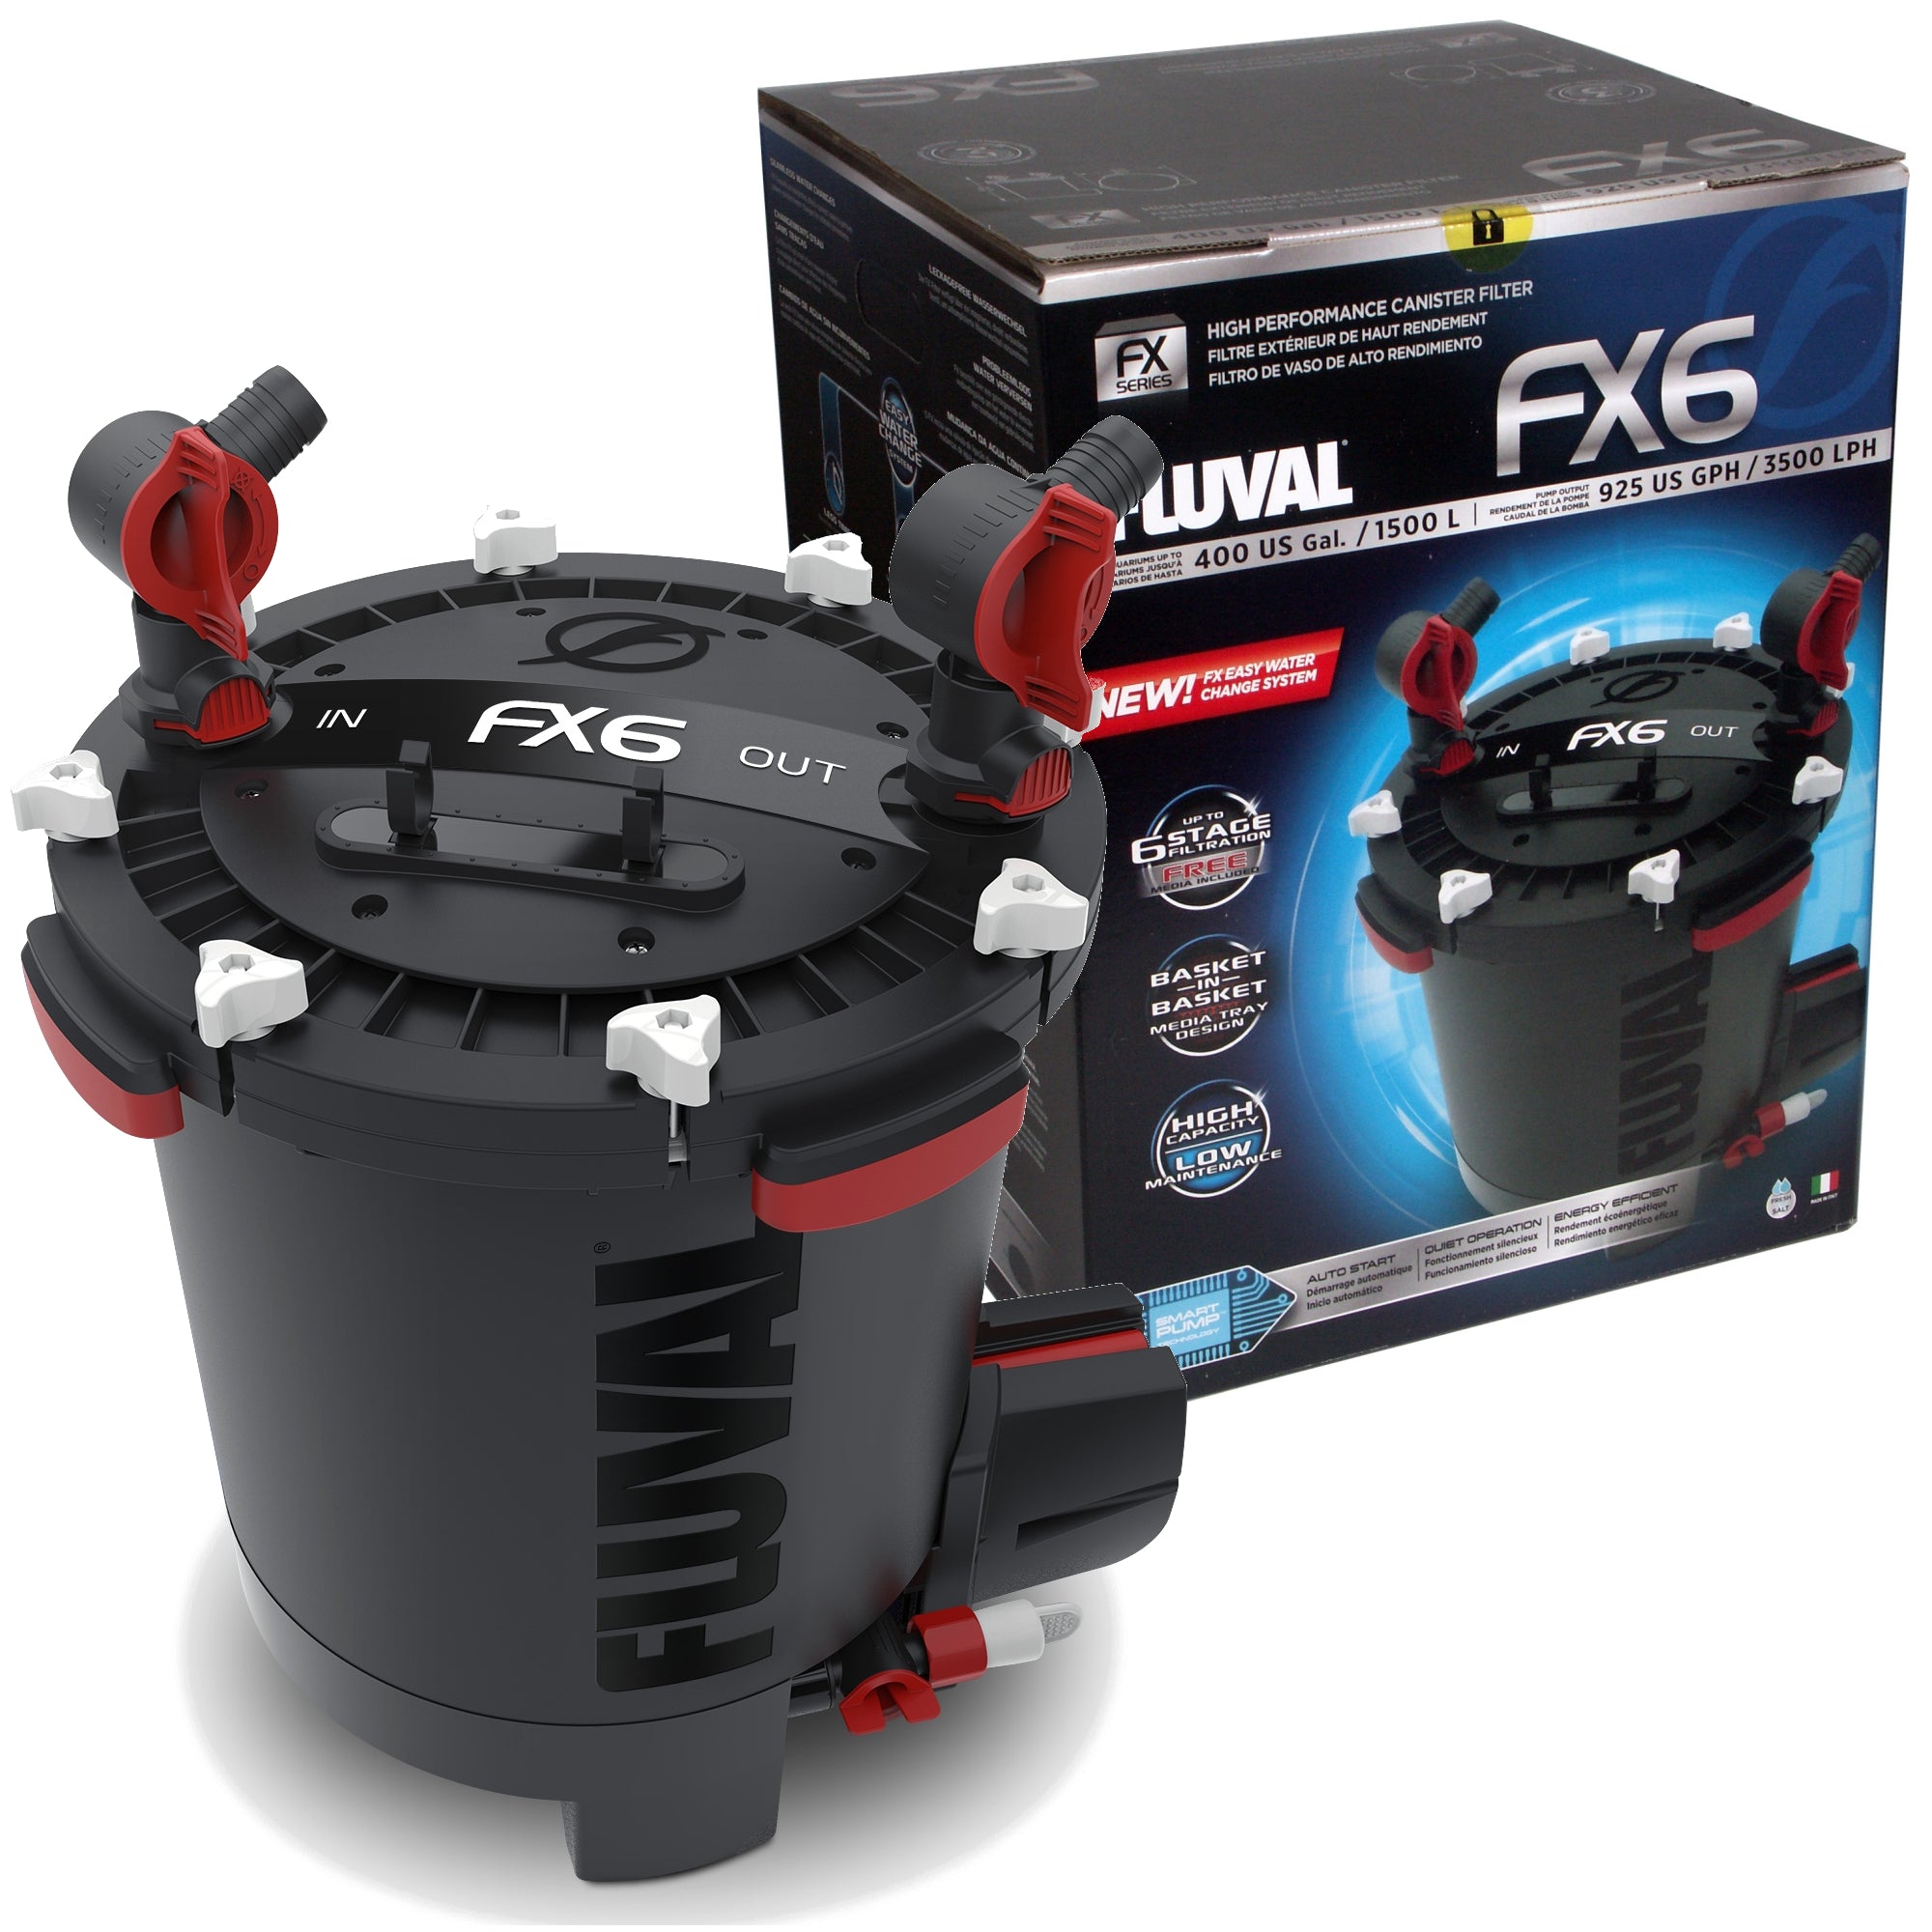 Fluval FX6 Aquarium External Filter 3500L/h for Tanks up to 1500L